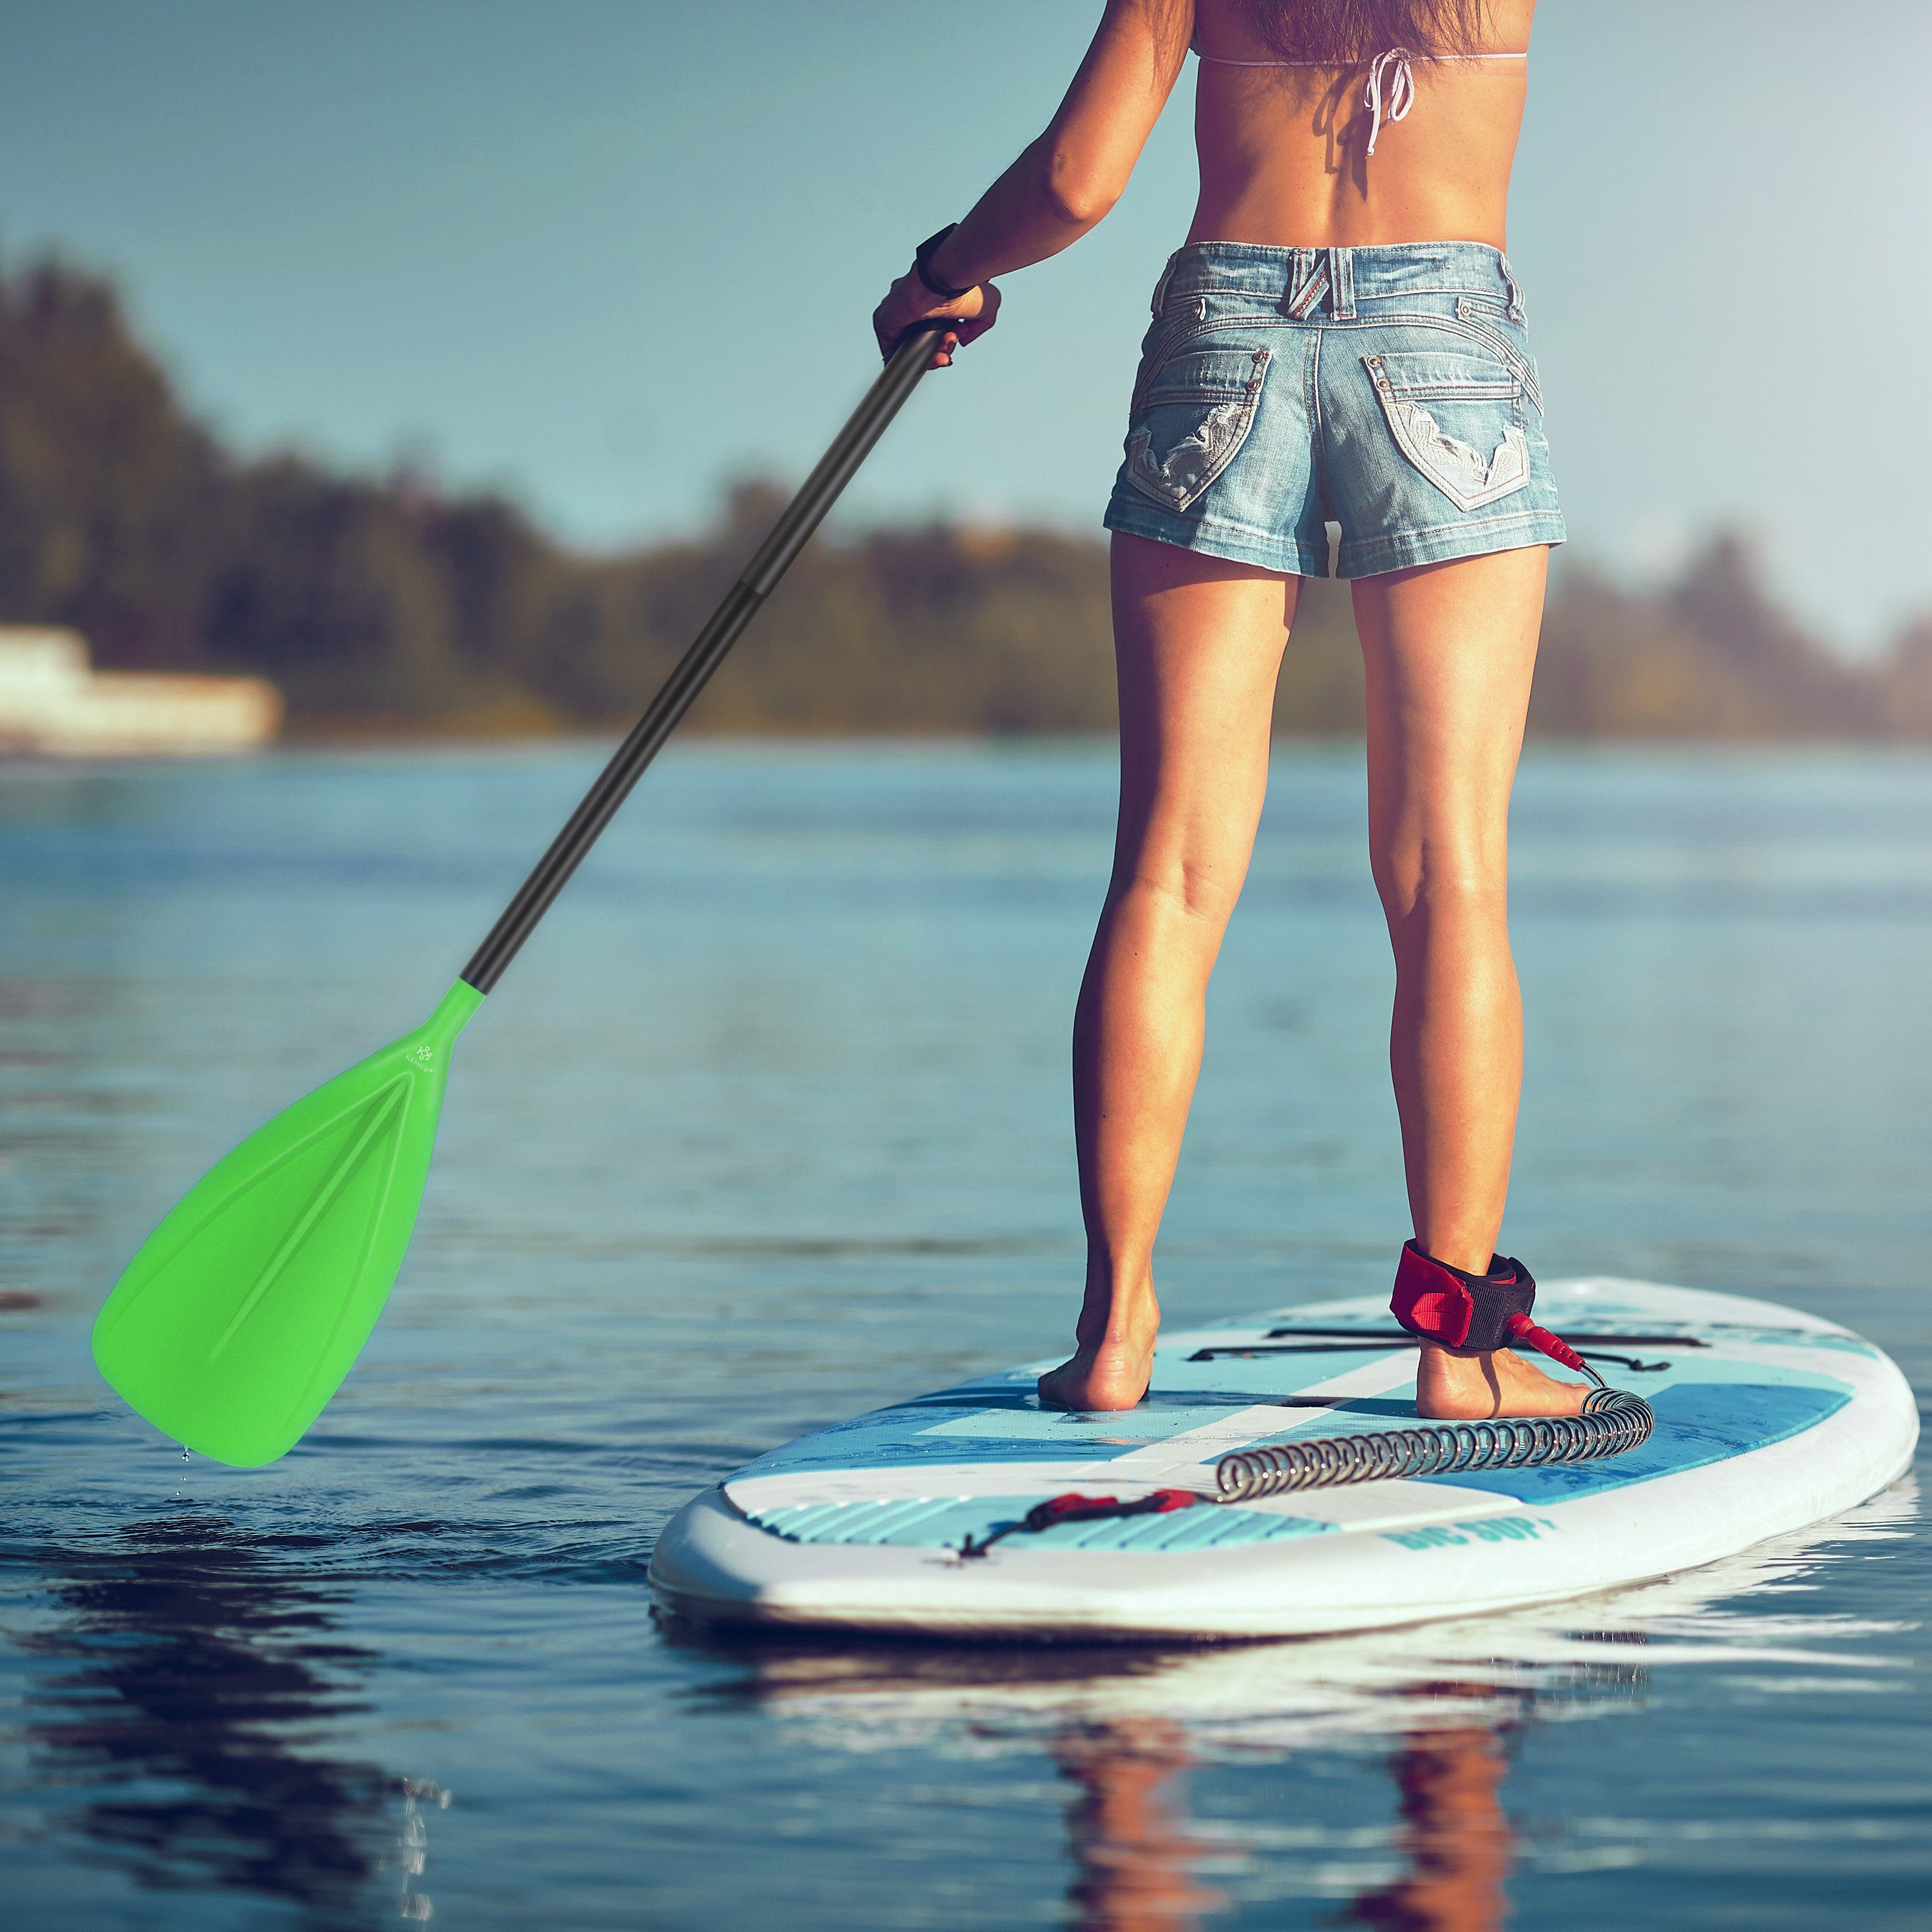 Kayak SUP-Paddel, Paddle Stand-Up Paddling KESSER SUP grün Board 3-teilig für